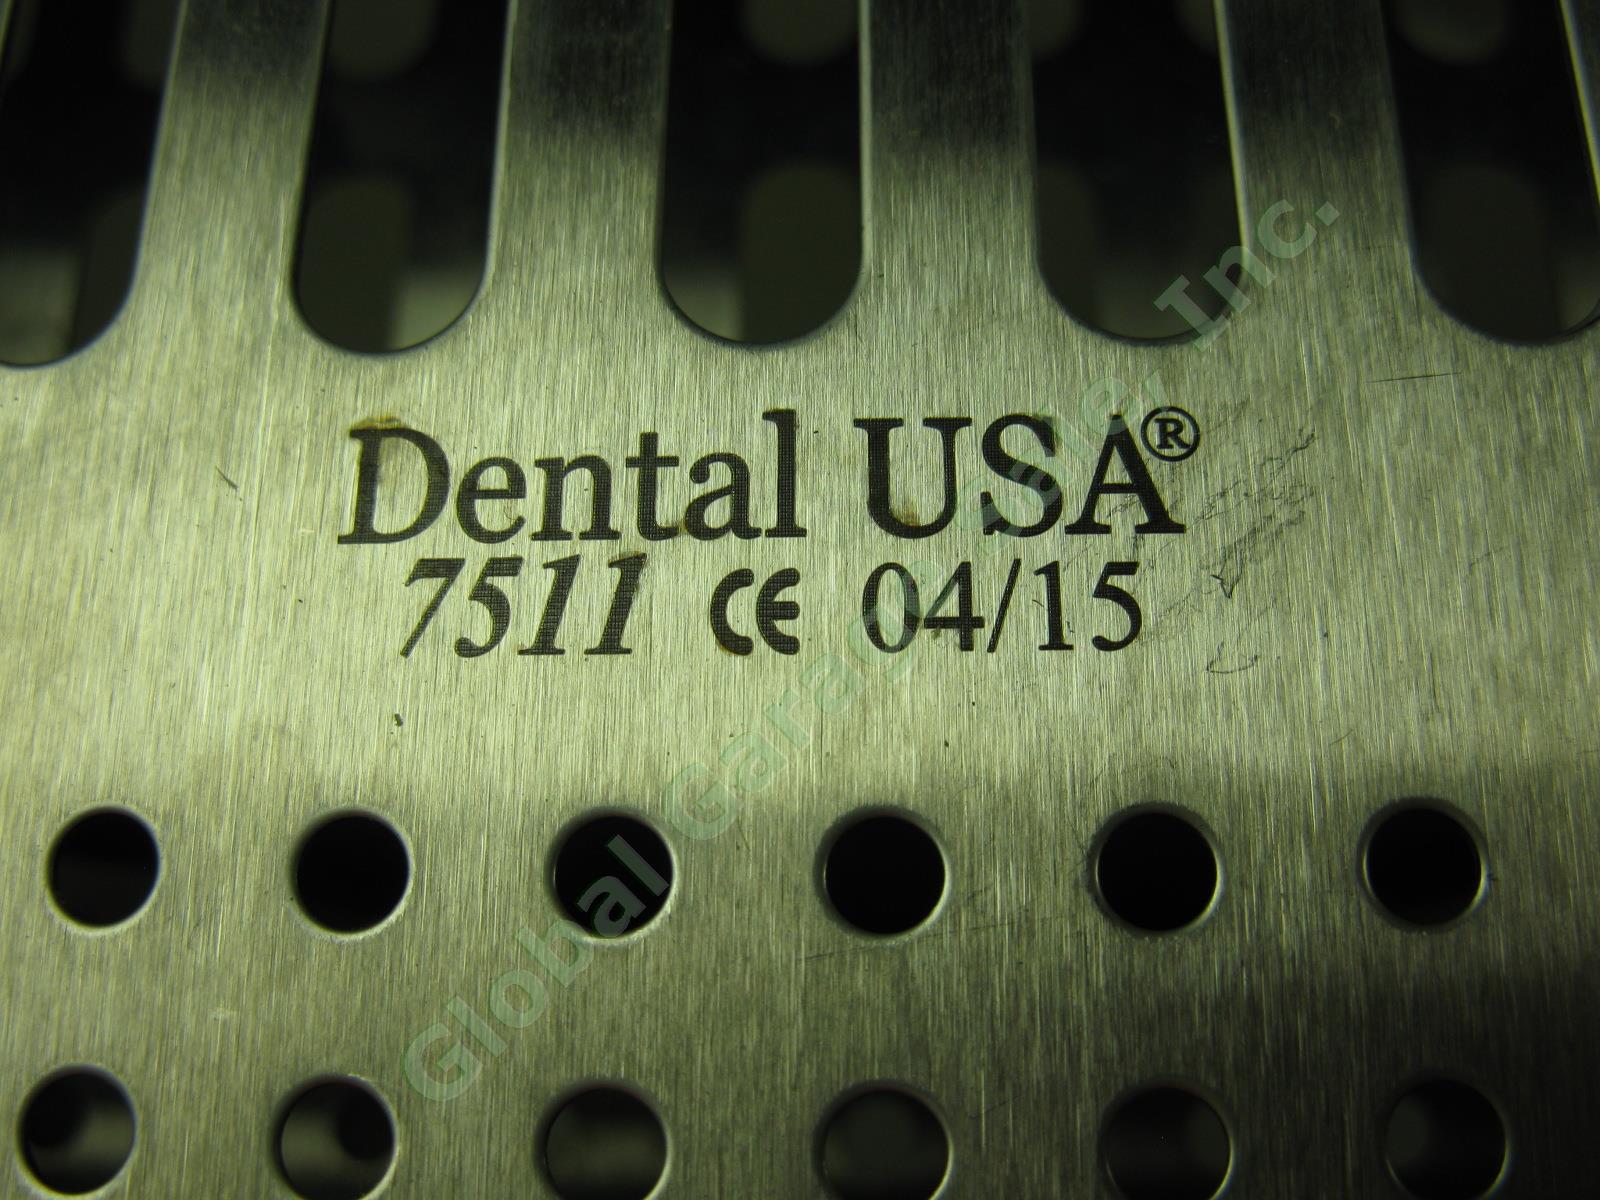 3 Stainless Dental Instrument Sterilizer Cassettes Trays Racks Box Lot Hu-Friedy 3